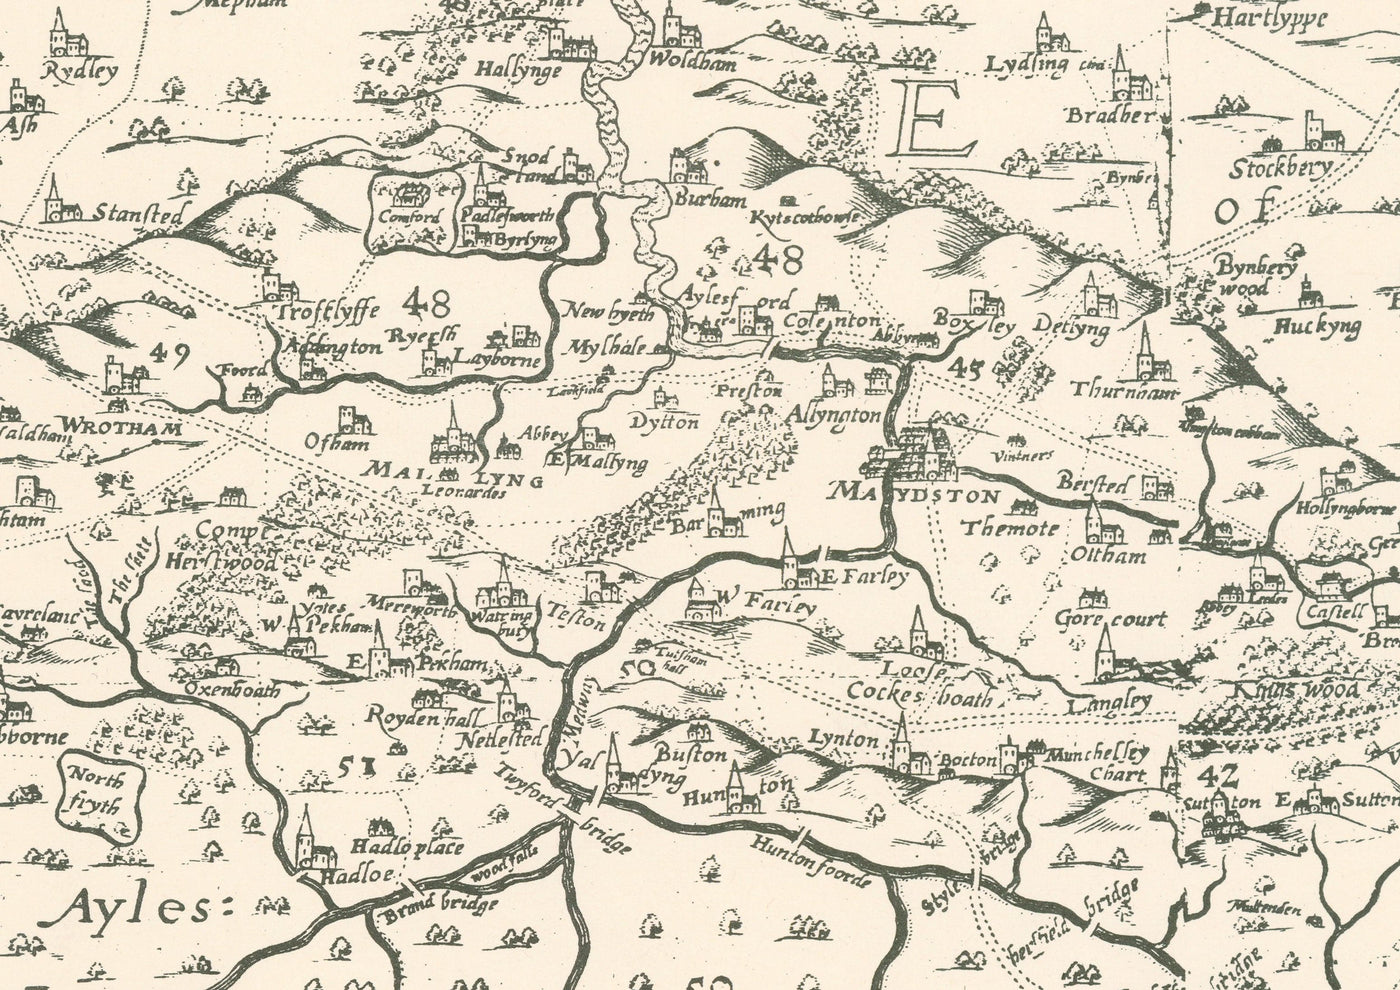 Ancienne carte du Kent en 1596 par Philip Symonson - Dartford, Maidstone, Bromley, Tunbridge, Gillingham, Chatham